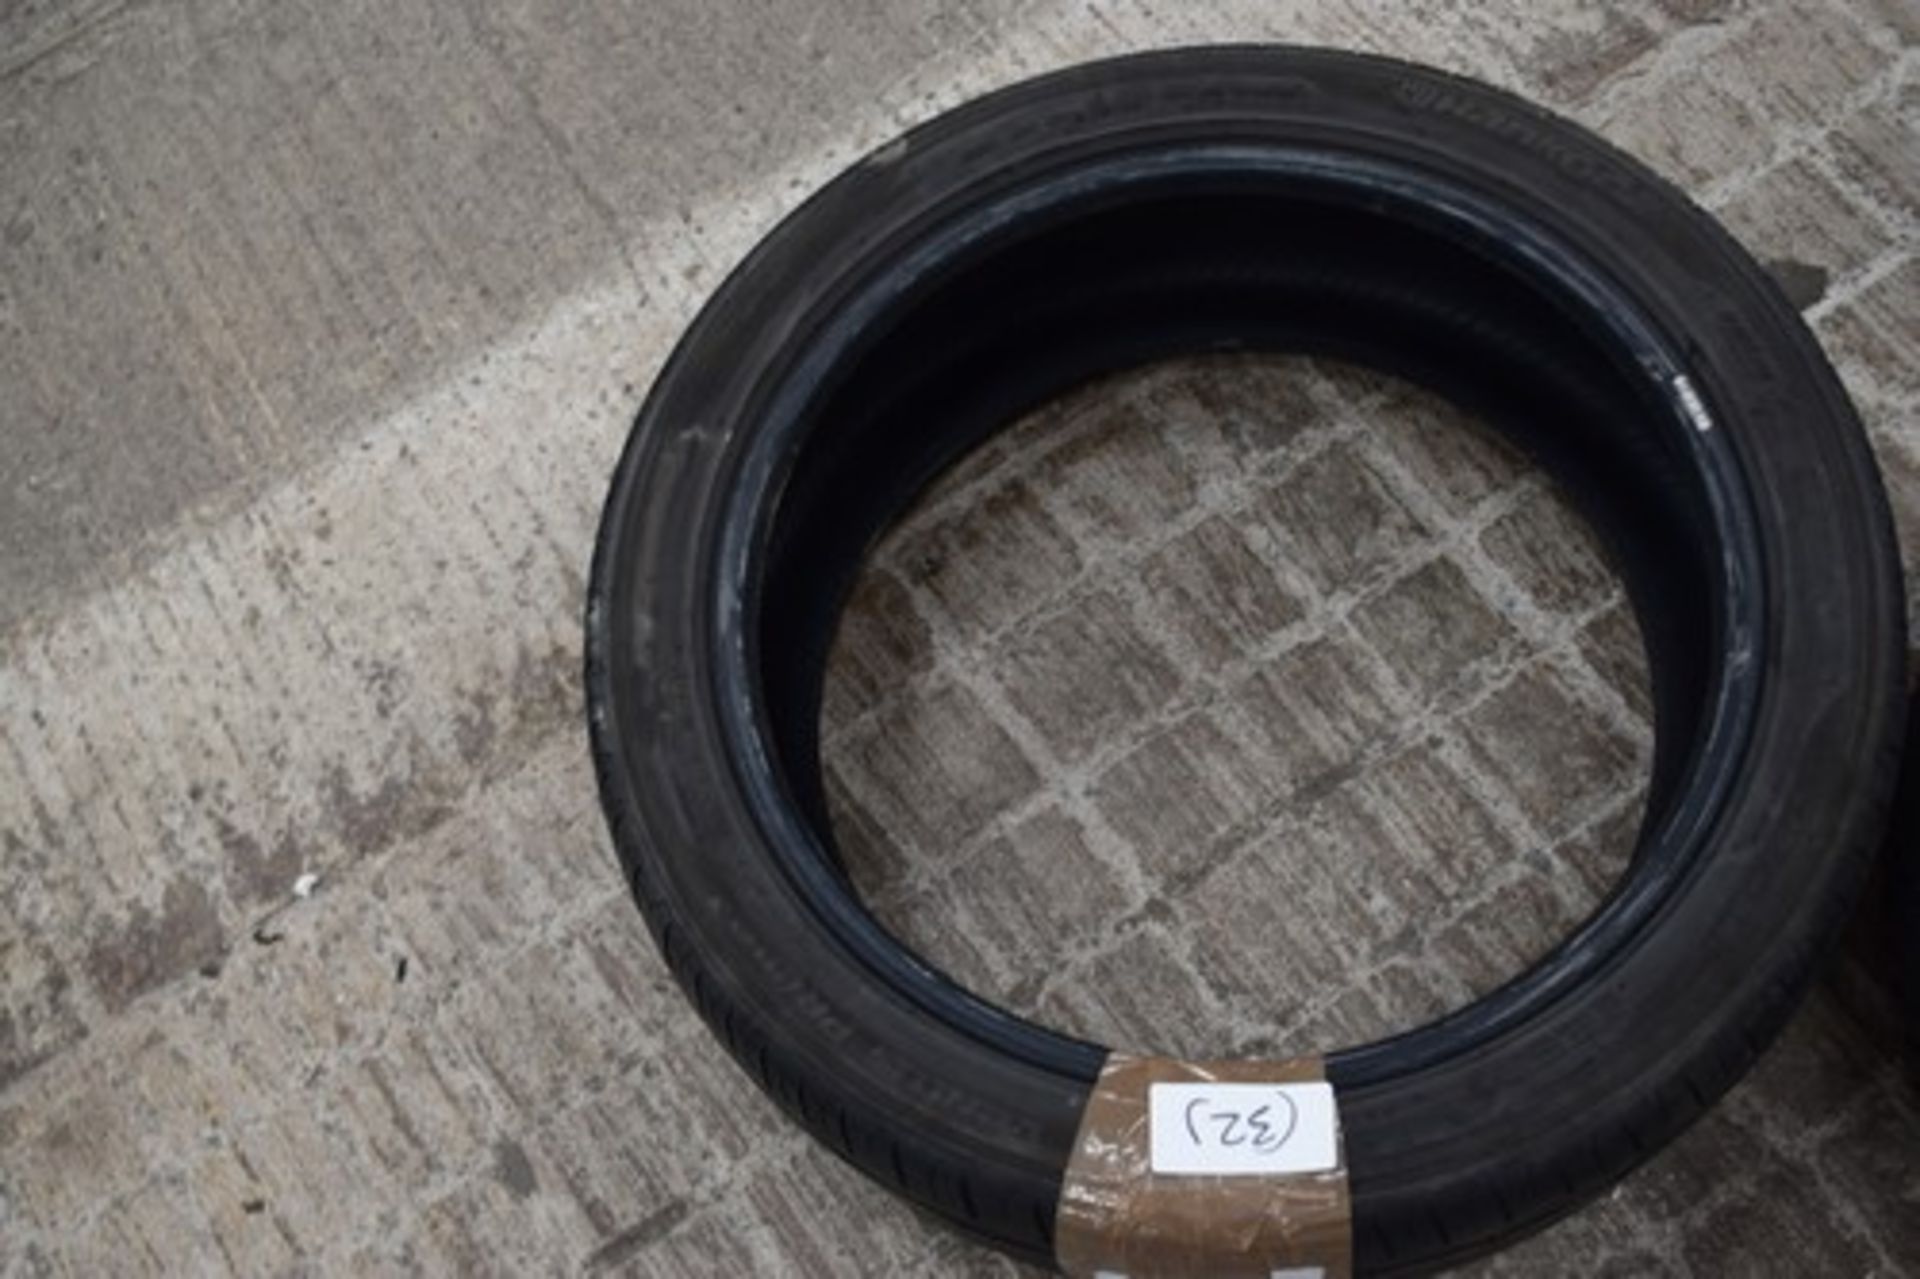 1 x Hankook Ventus Prime 3 tyre, size 215/45R18 89V - new (C3)(32)